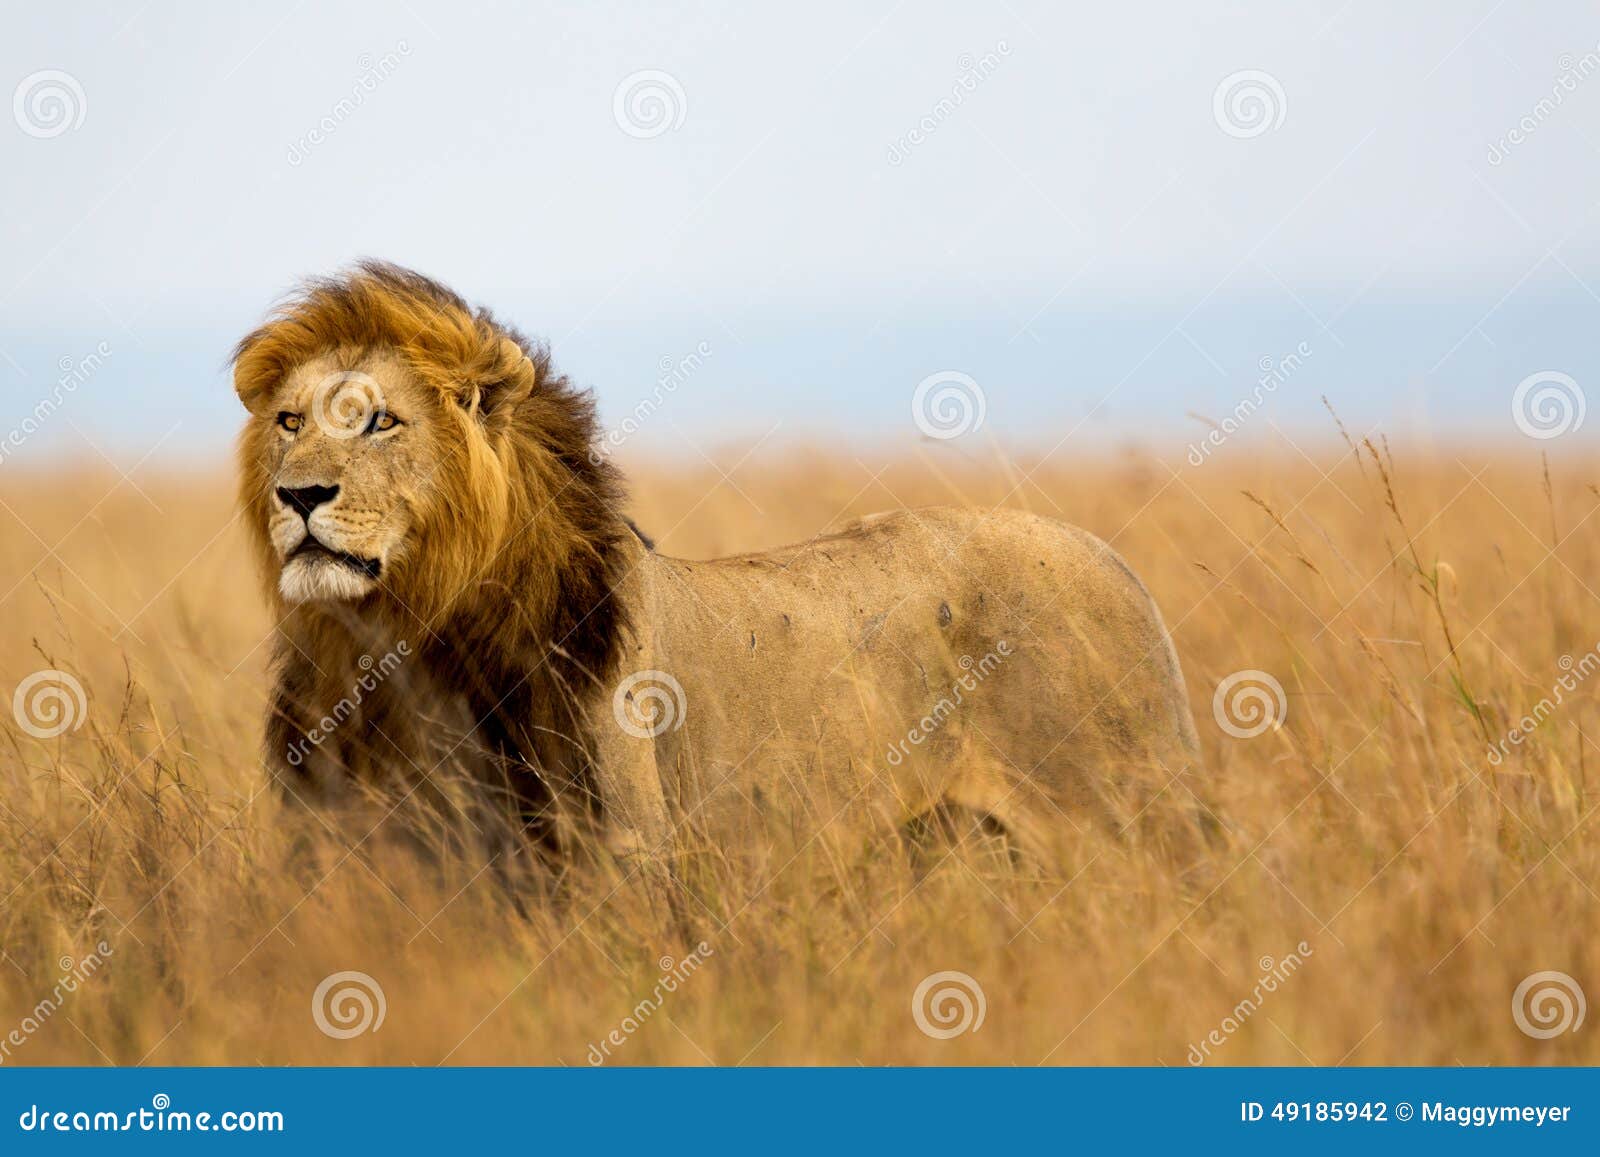 big lion caesar in masai mara